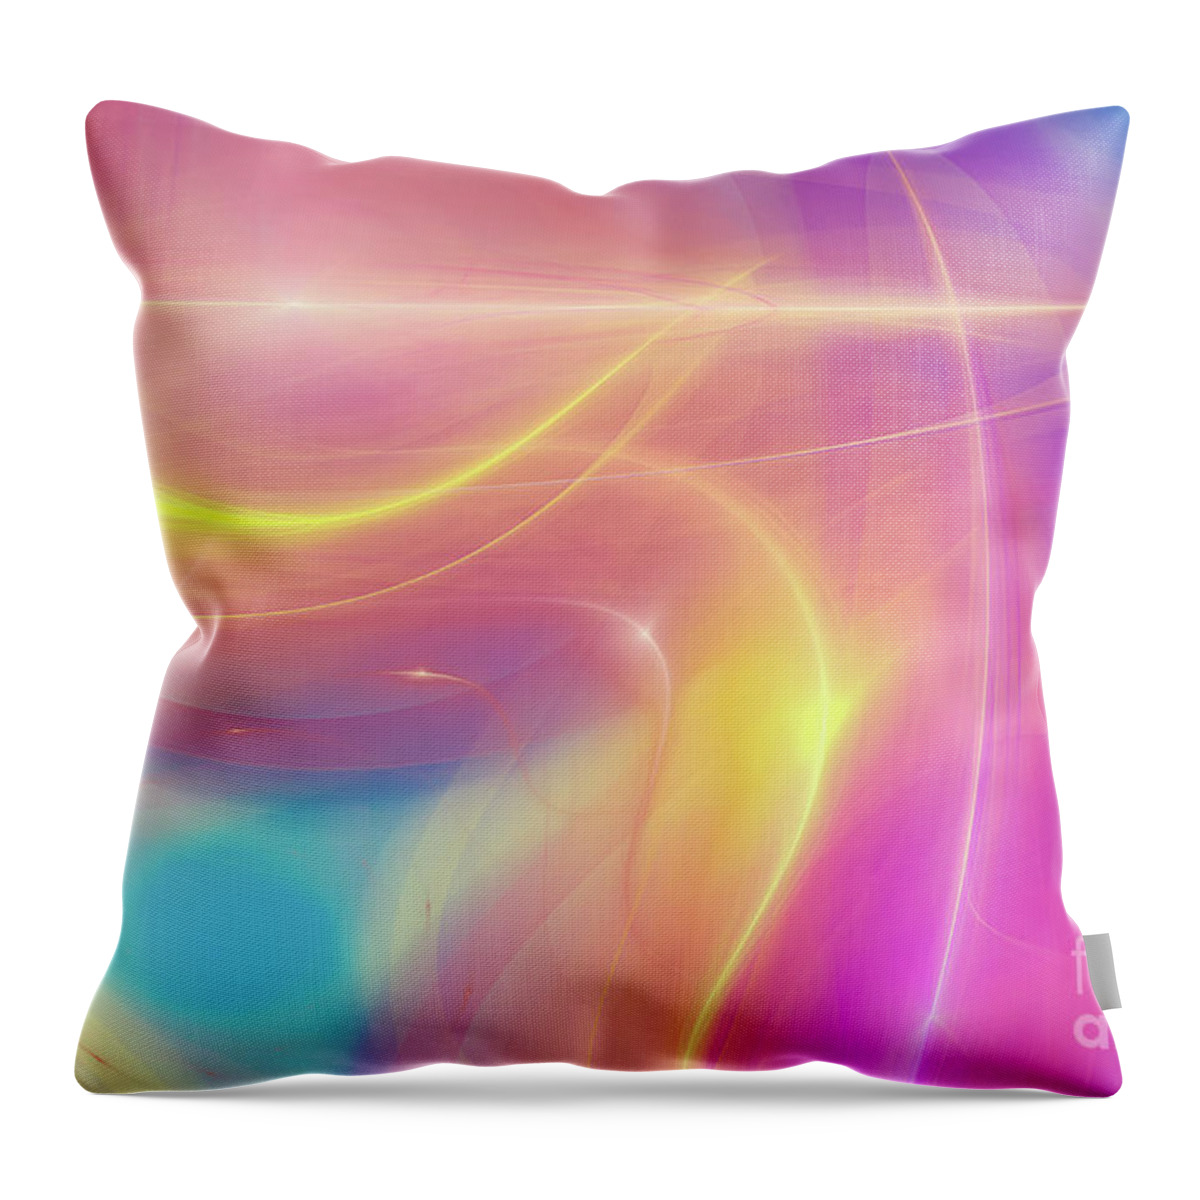 Abstract Throw Pillow featuring the digital art Neon light cosmic rays by Marina Usmanskaya